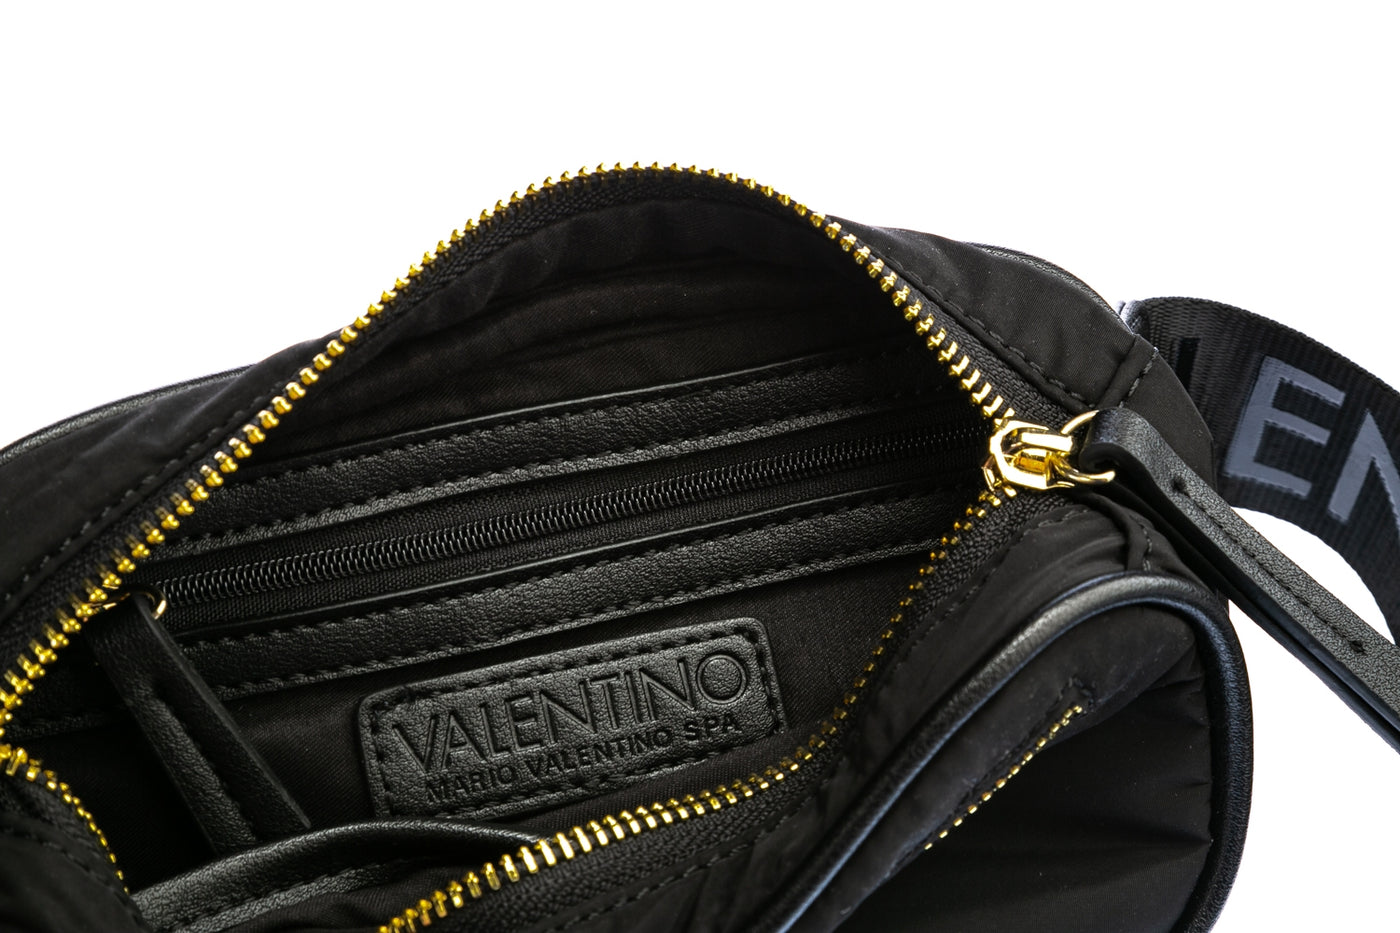 Valentino by Mario Valentino Registan Ladies Bum Bag in Black